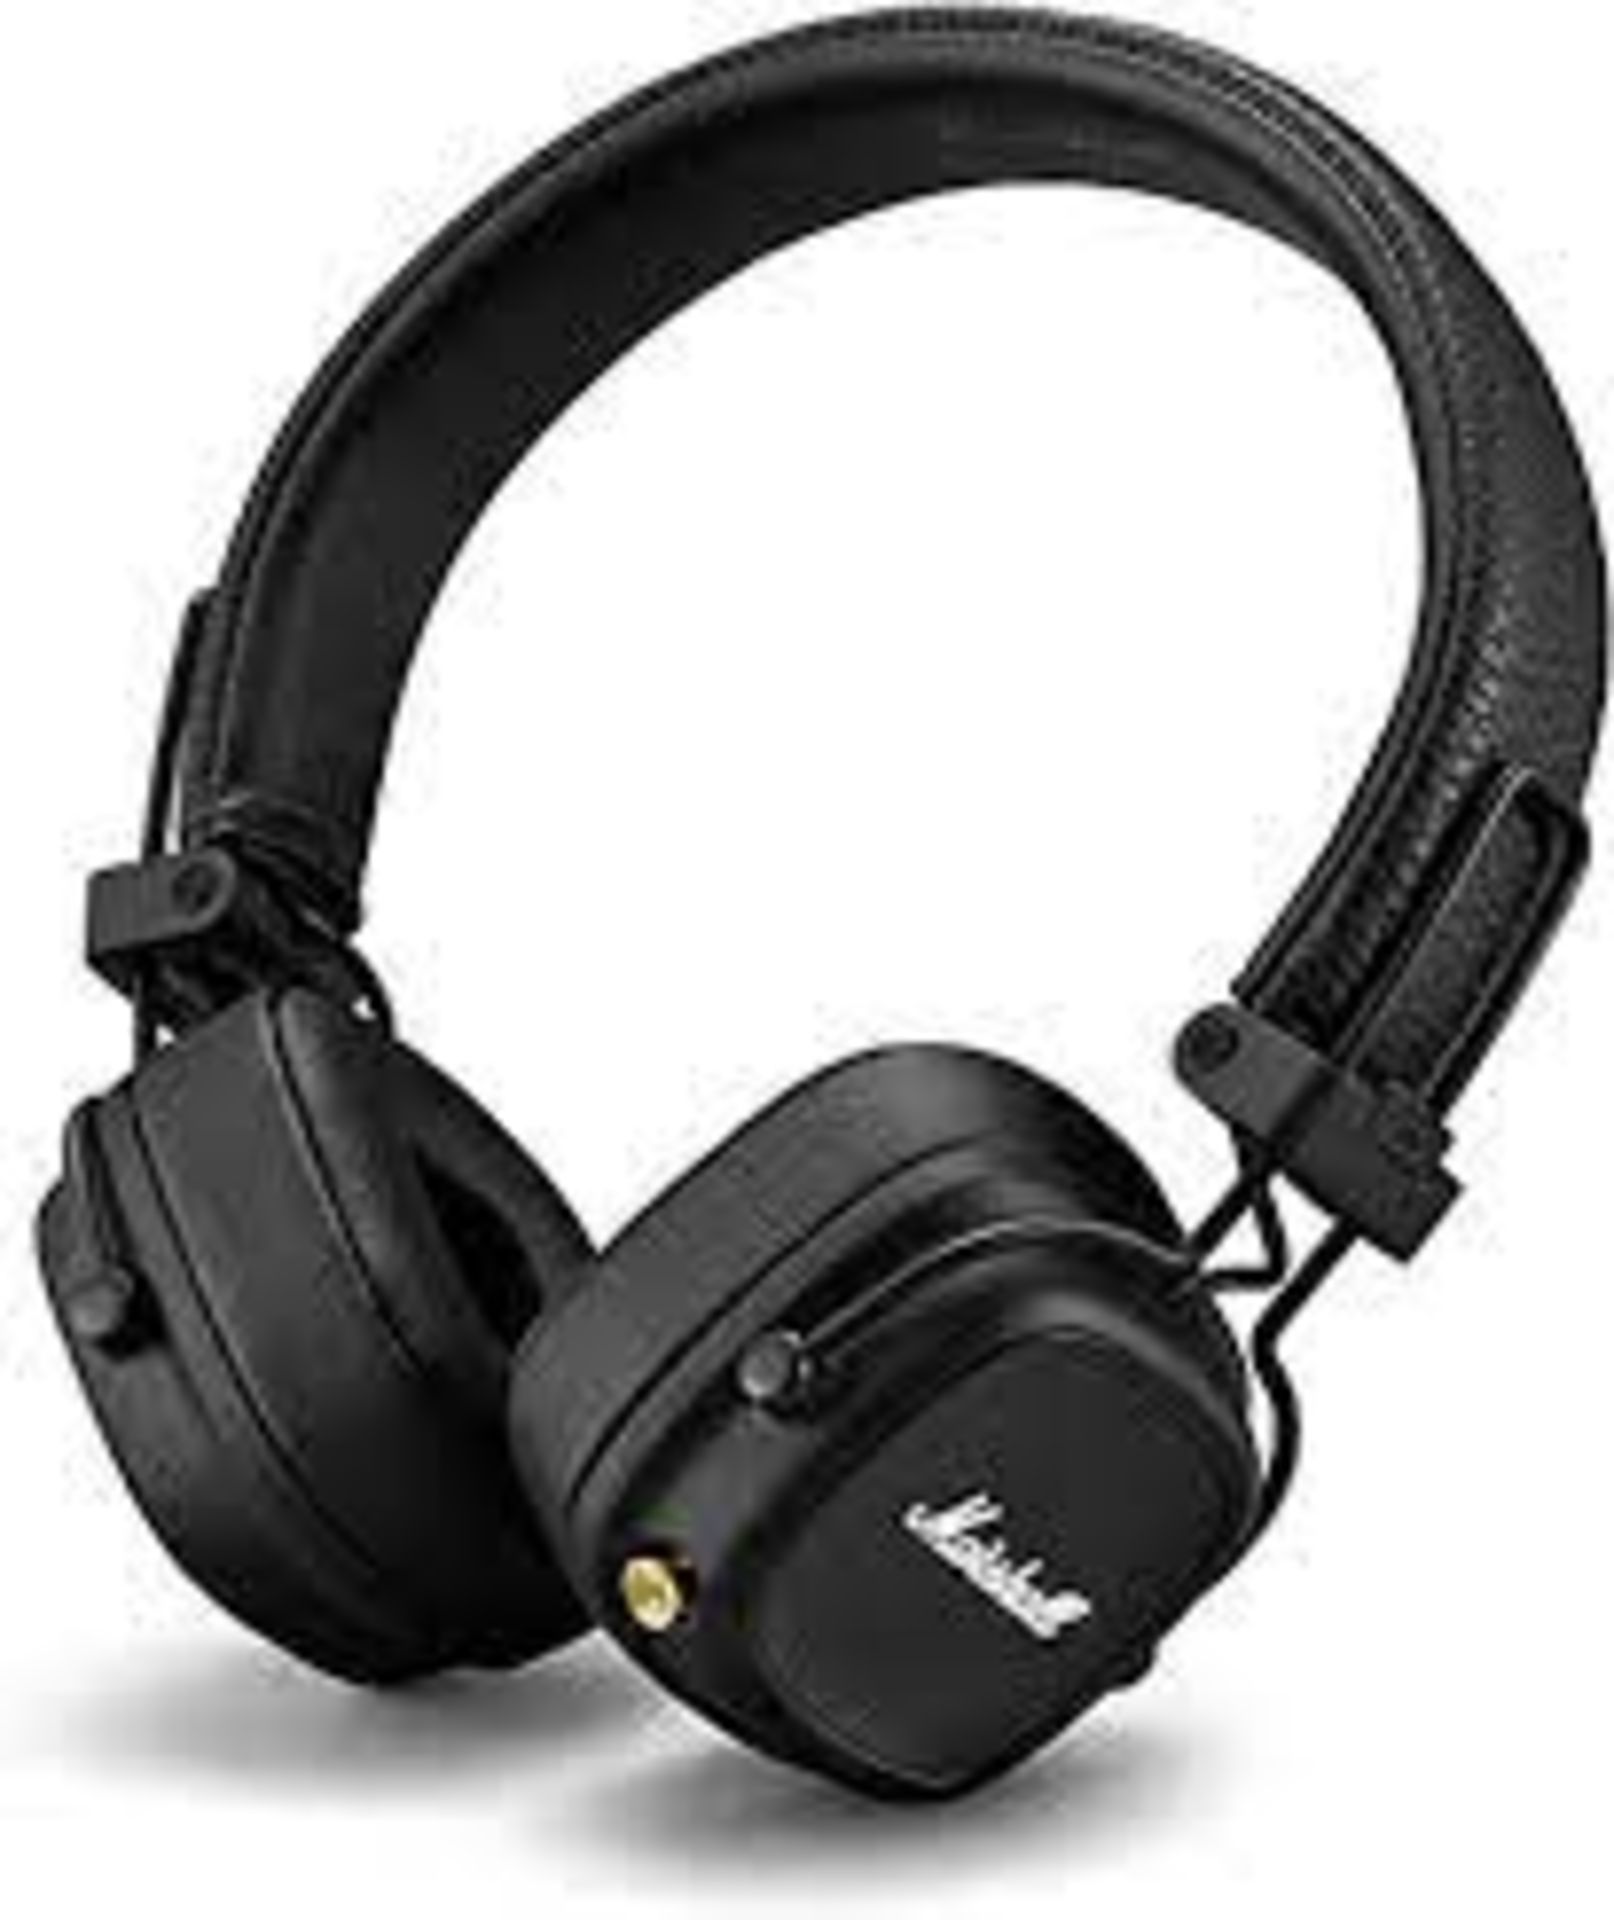 Marshall Major IV On Ear Bluetooth Headphones, Wireless Earphones, Foldable, 80+ Hours Wireless